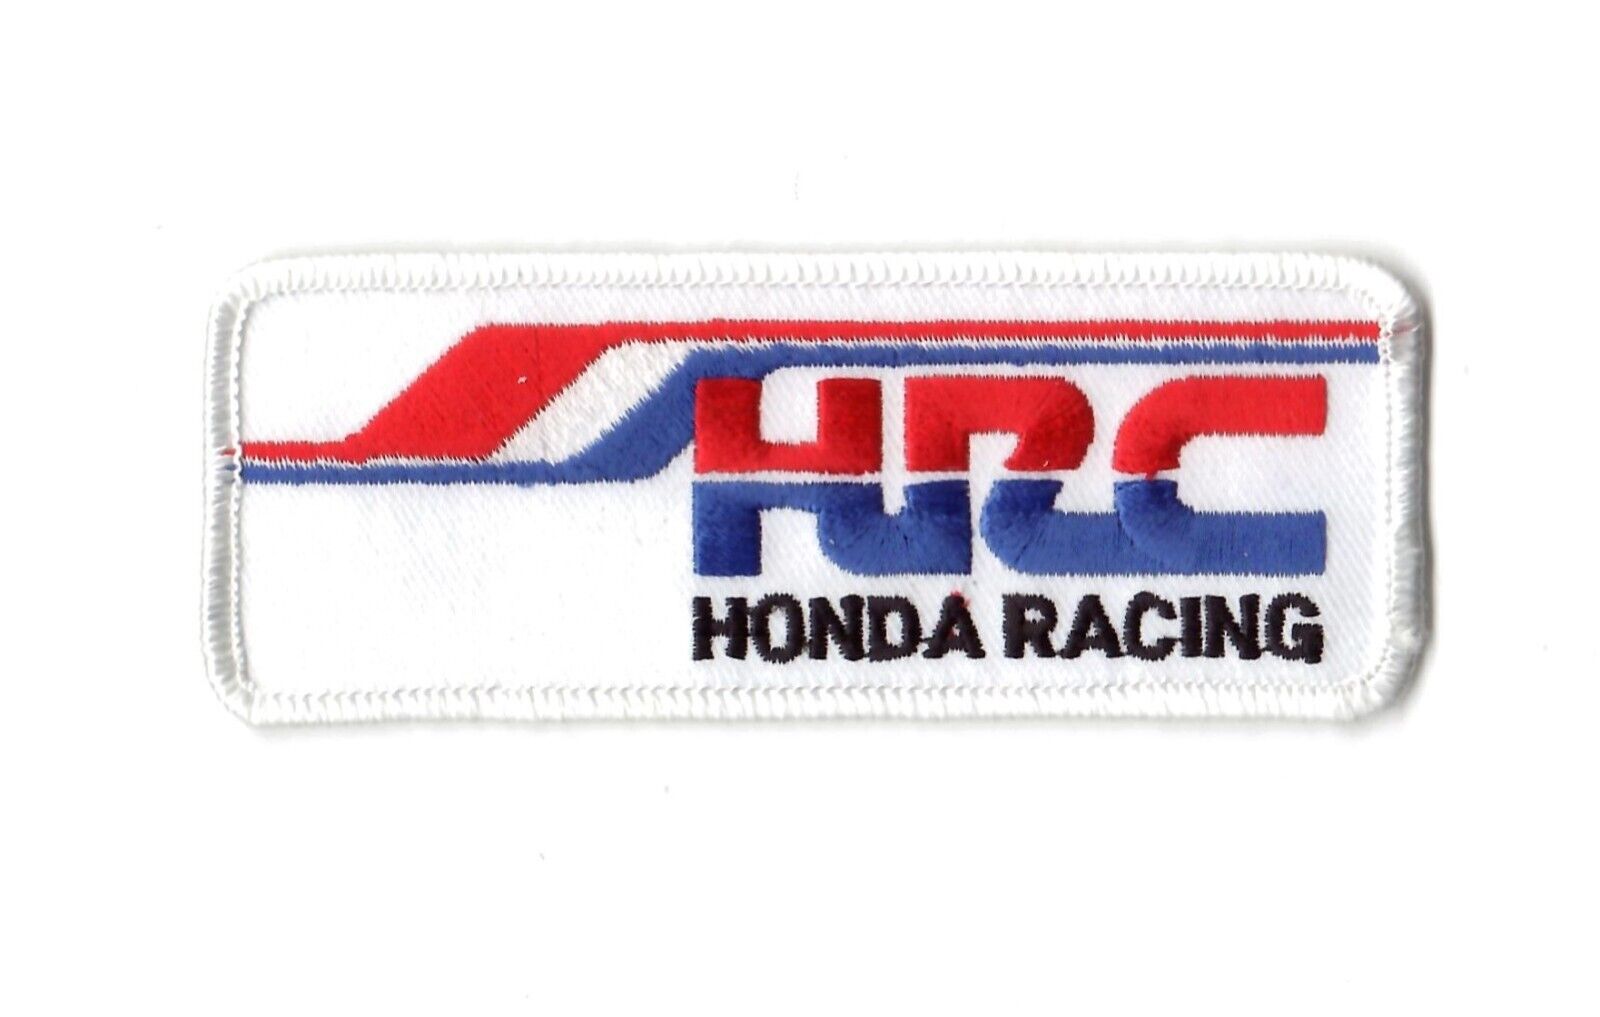 Vintage Honda Racing HRC Cloth Patch Badge Motorcycle GP Racing